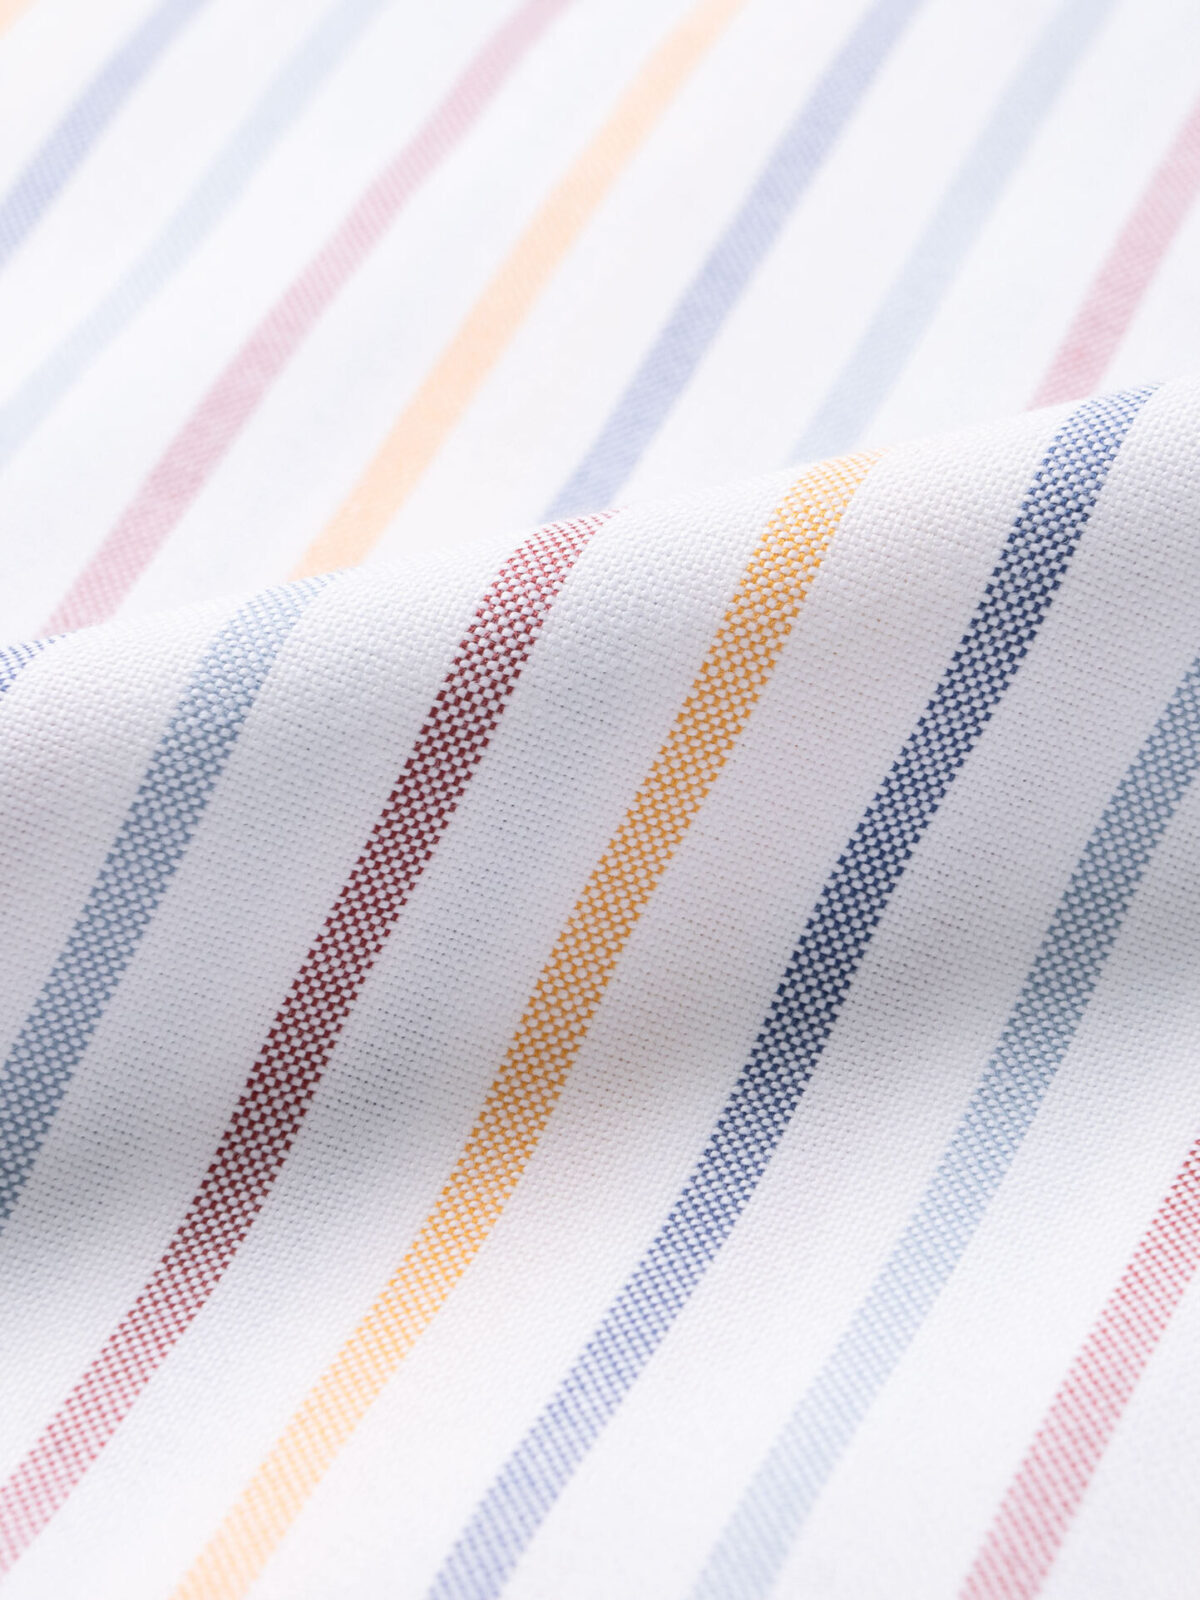 American Pima Fun Stripe Oxford Cloth Shirts by Proper Cloth